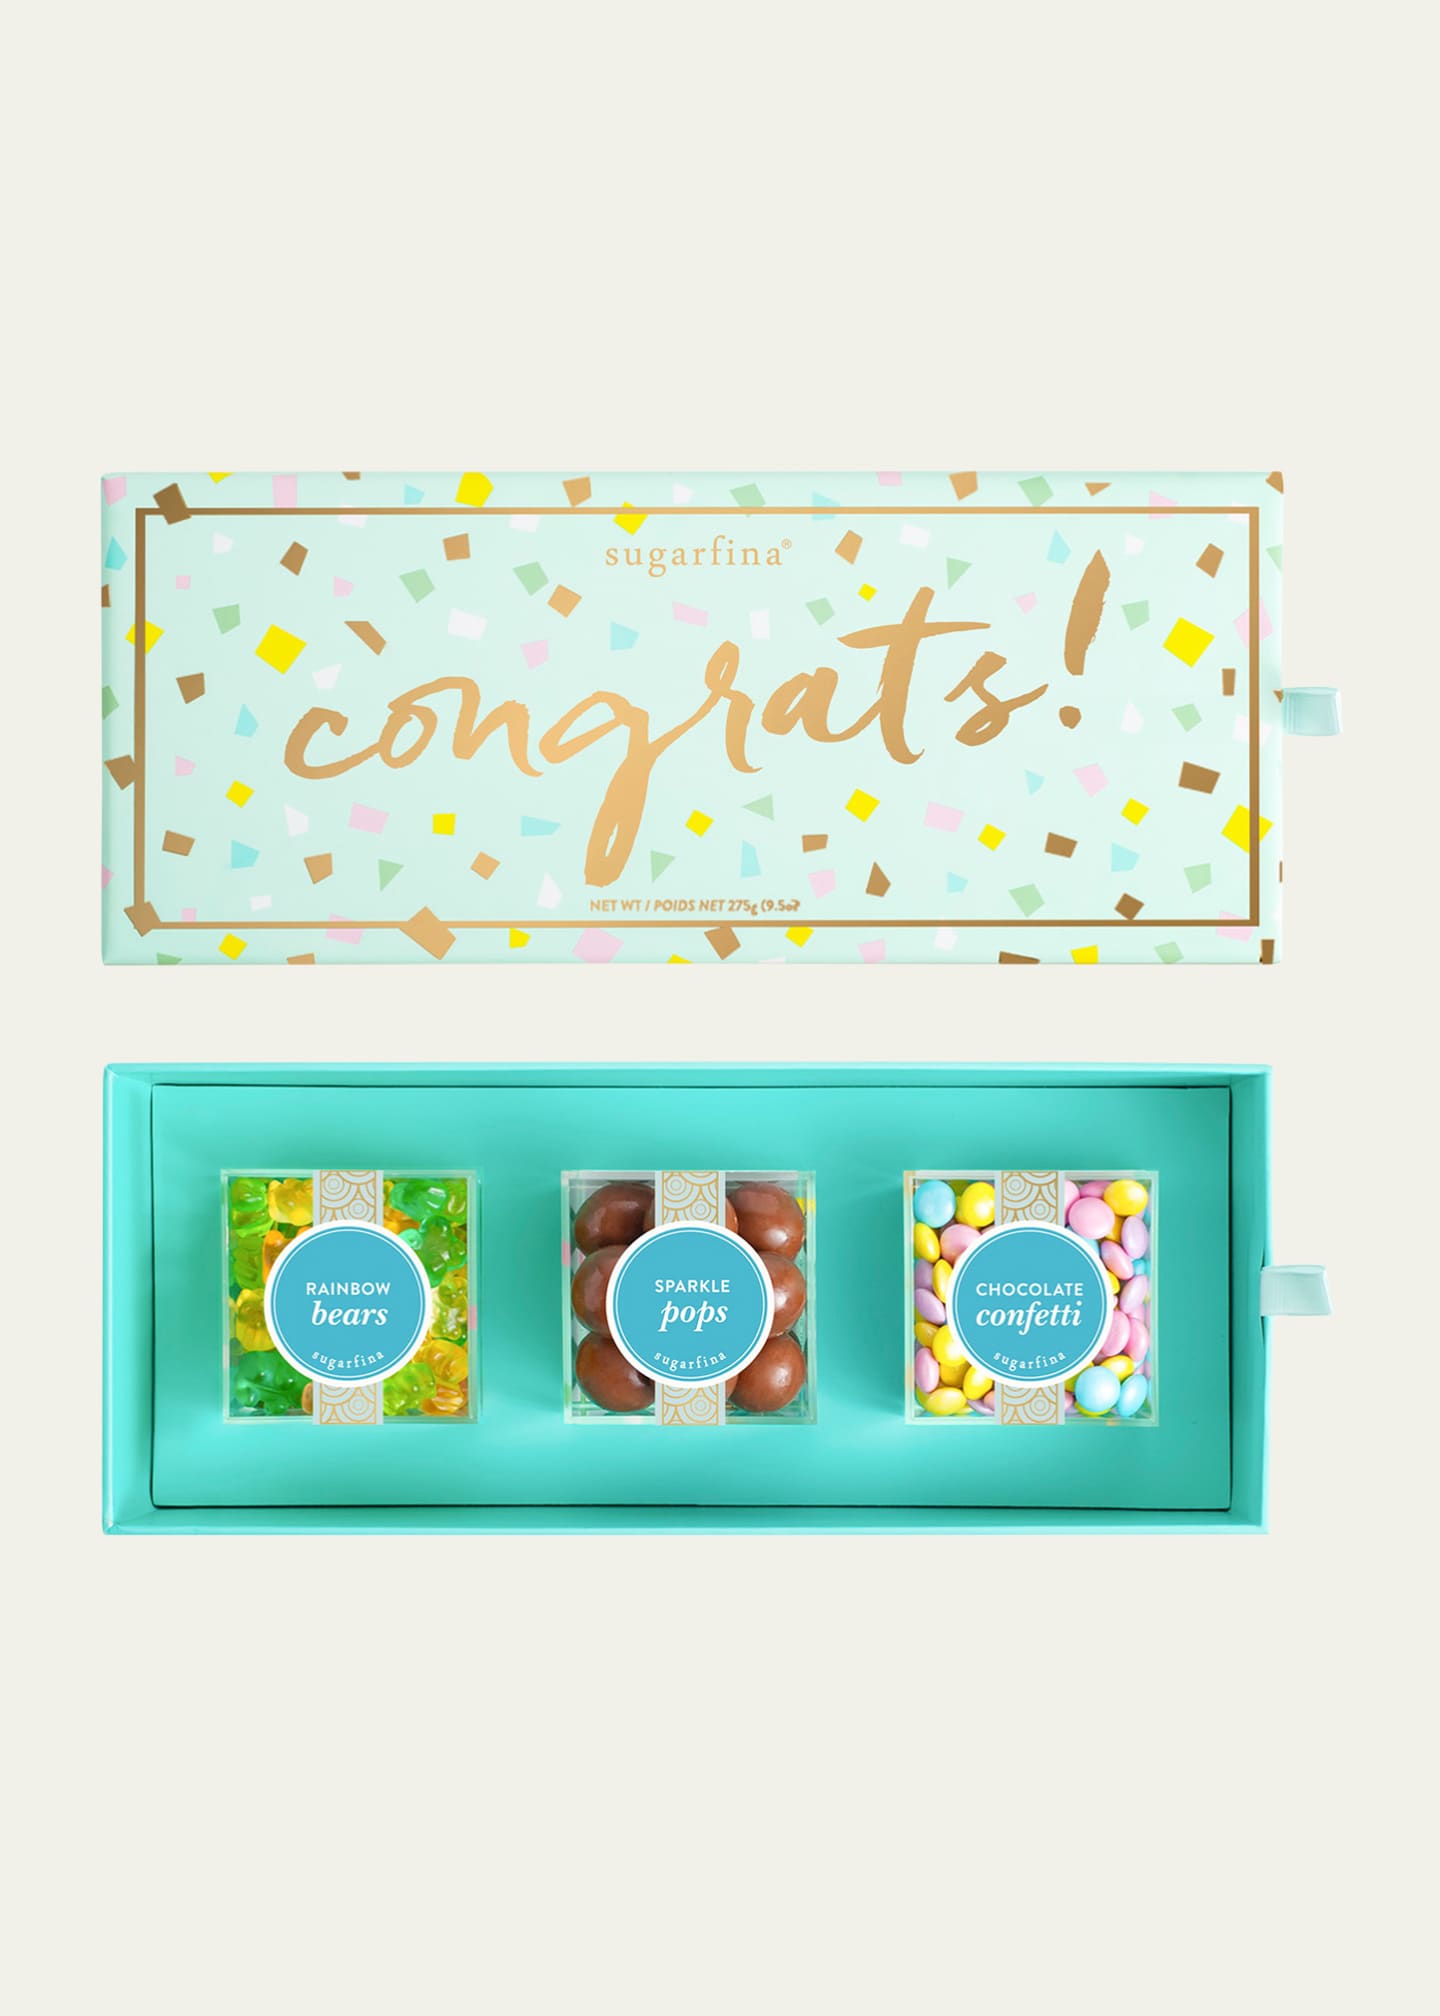 Sugarfina Congrats 3-Piece Candy Bento Box Image 1 of 3